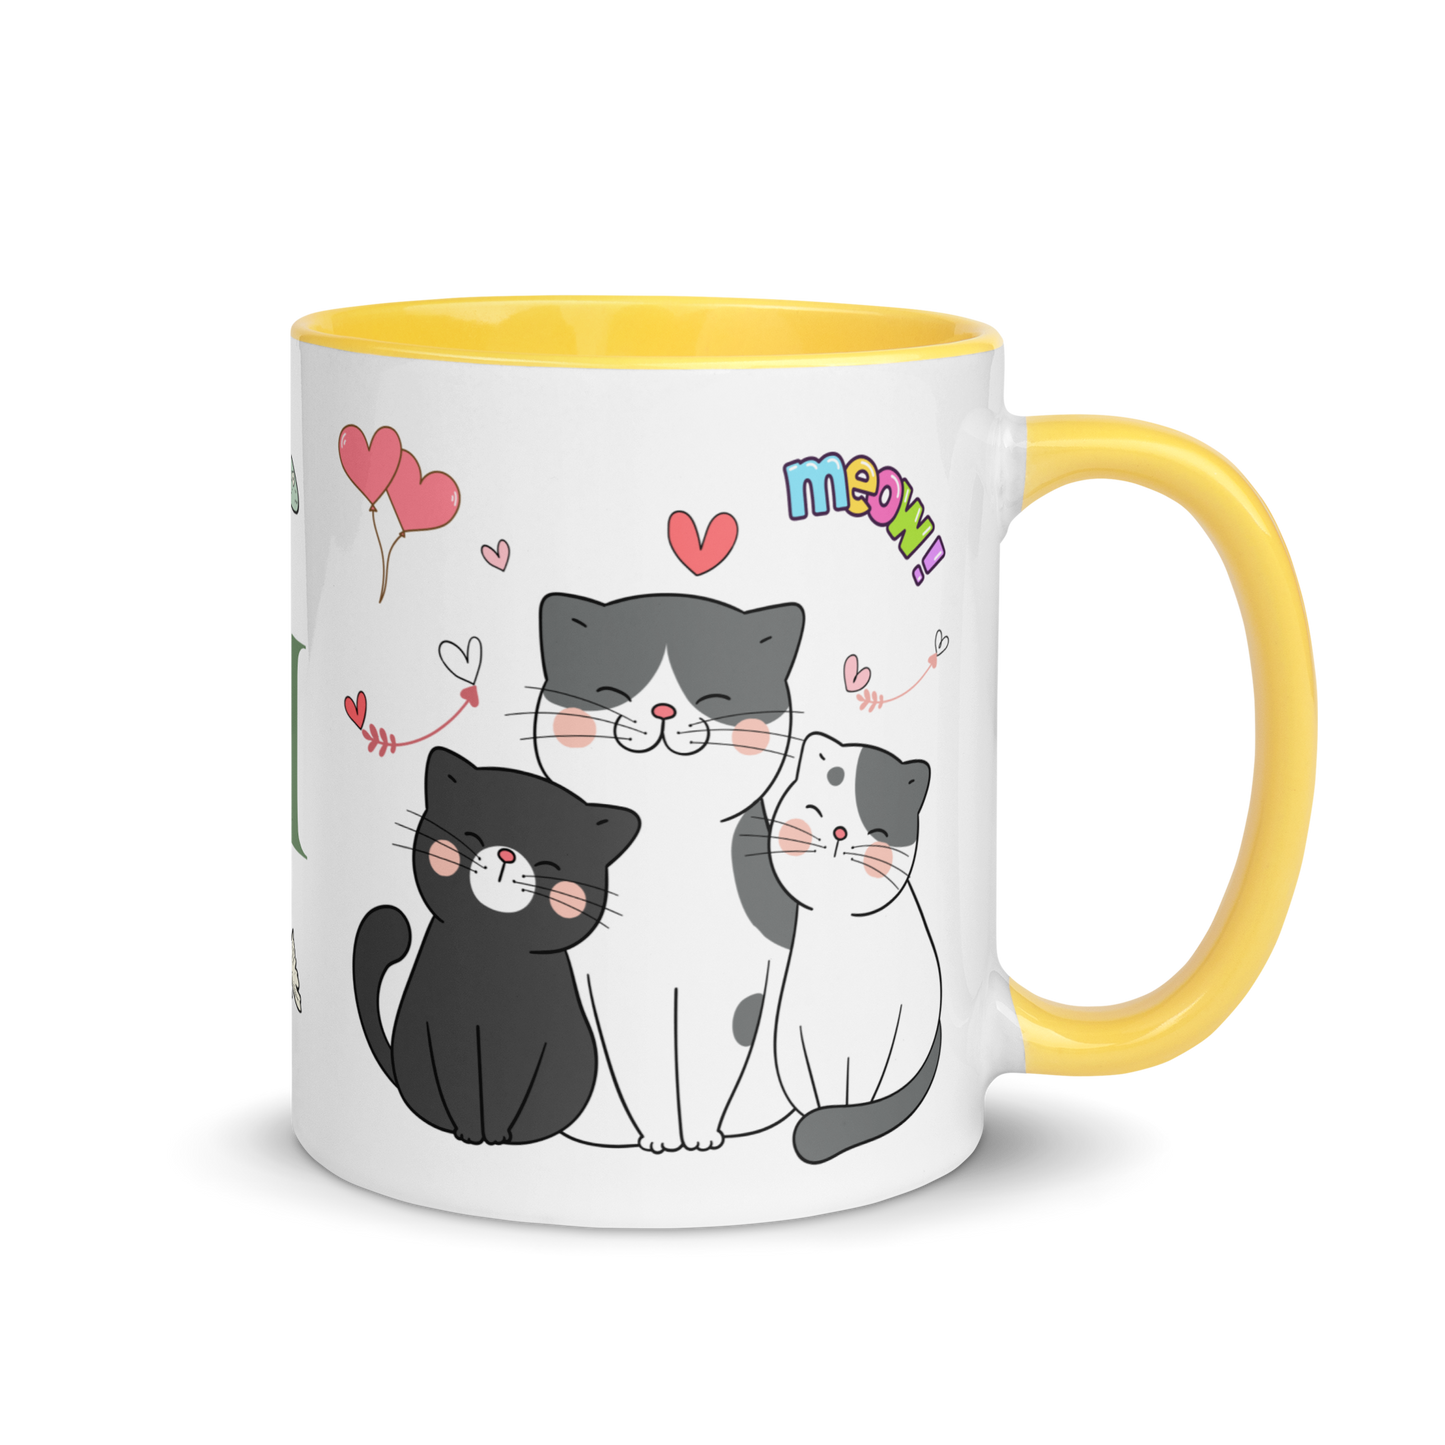 Personalized Monogram Mug 11oz | Adorable Cats Meow Hearts Themed